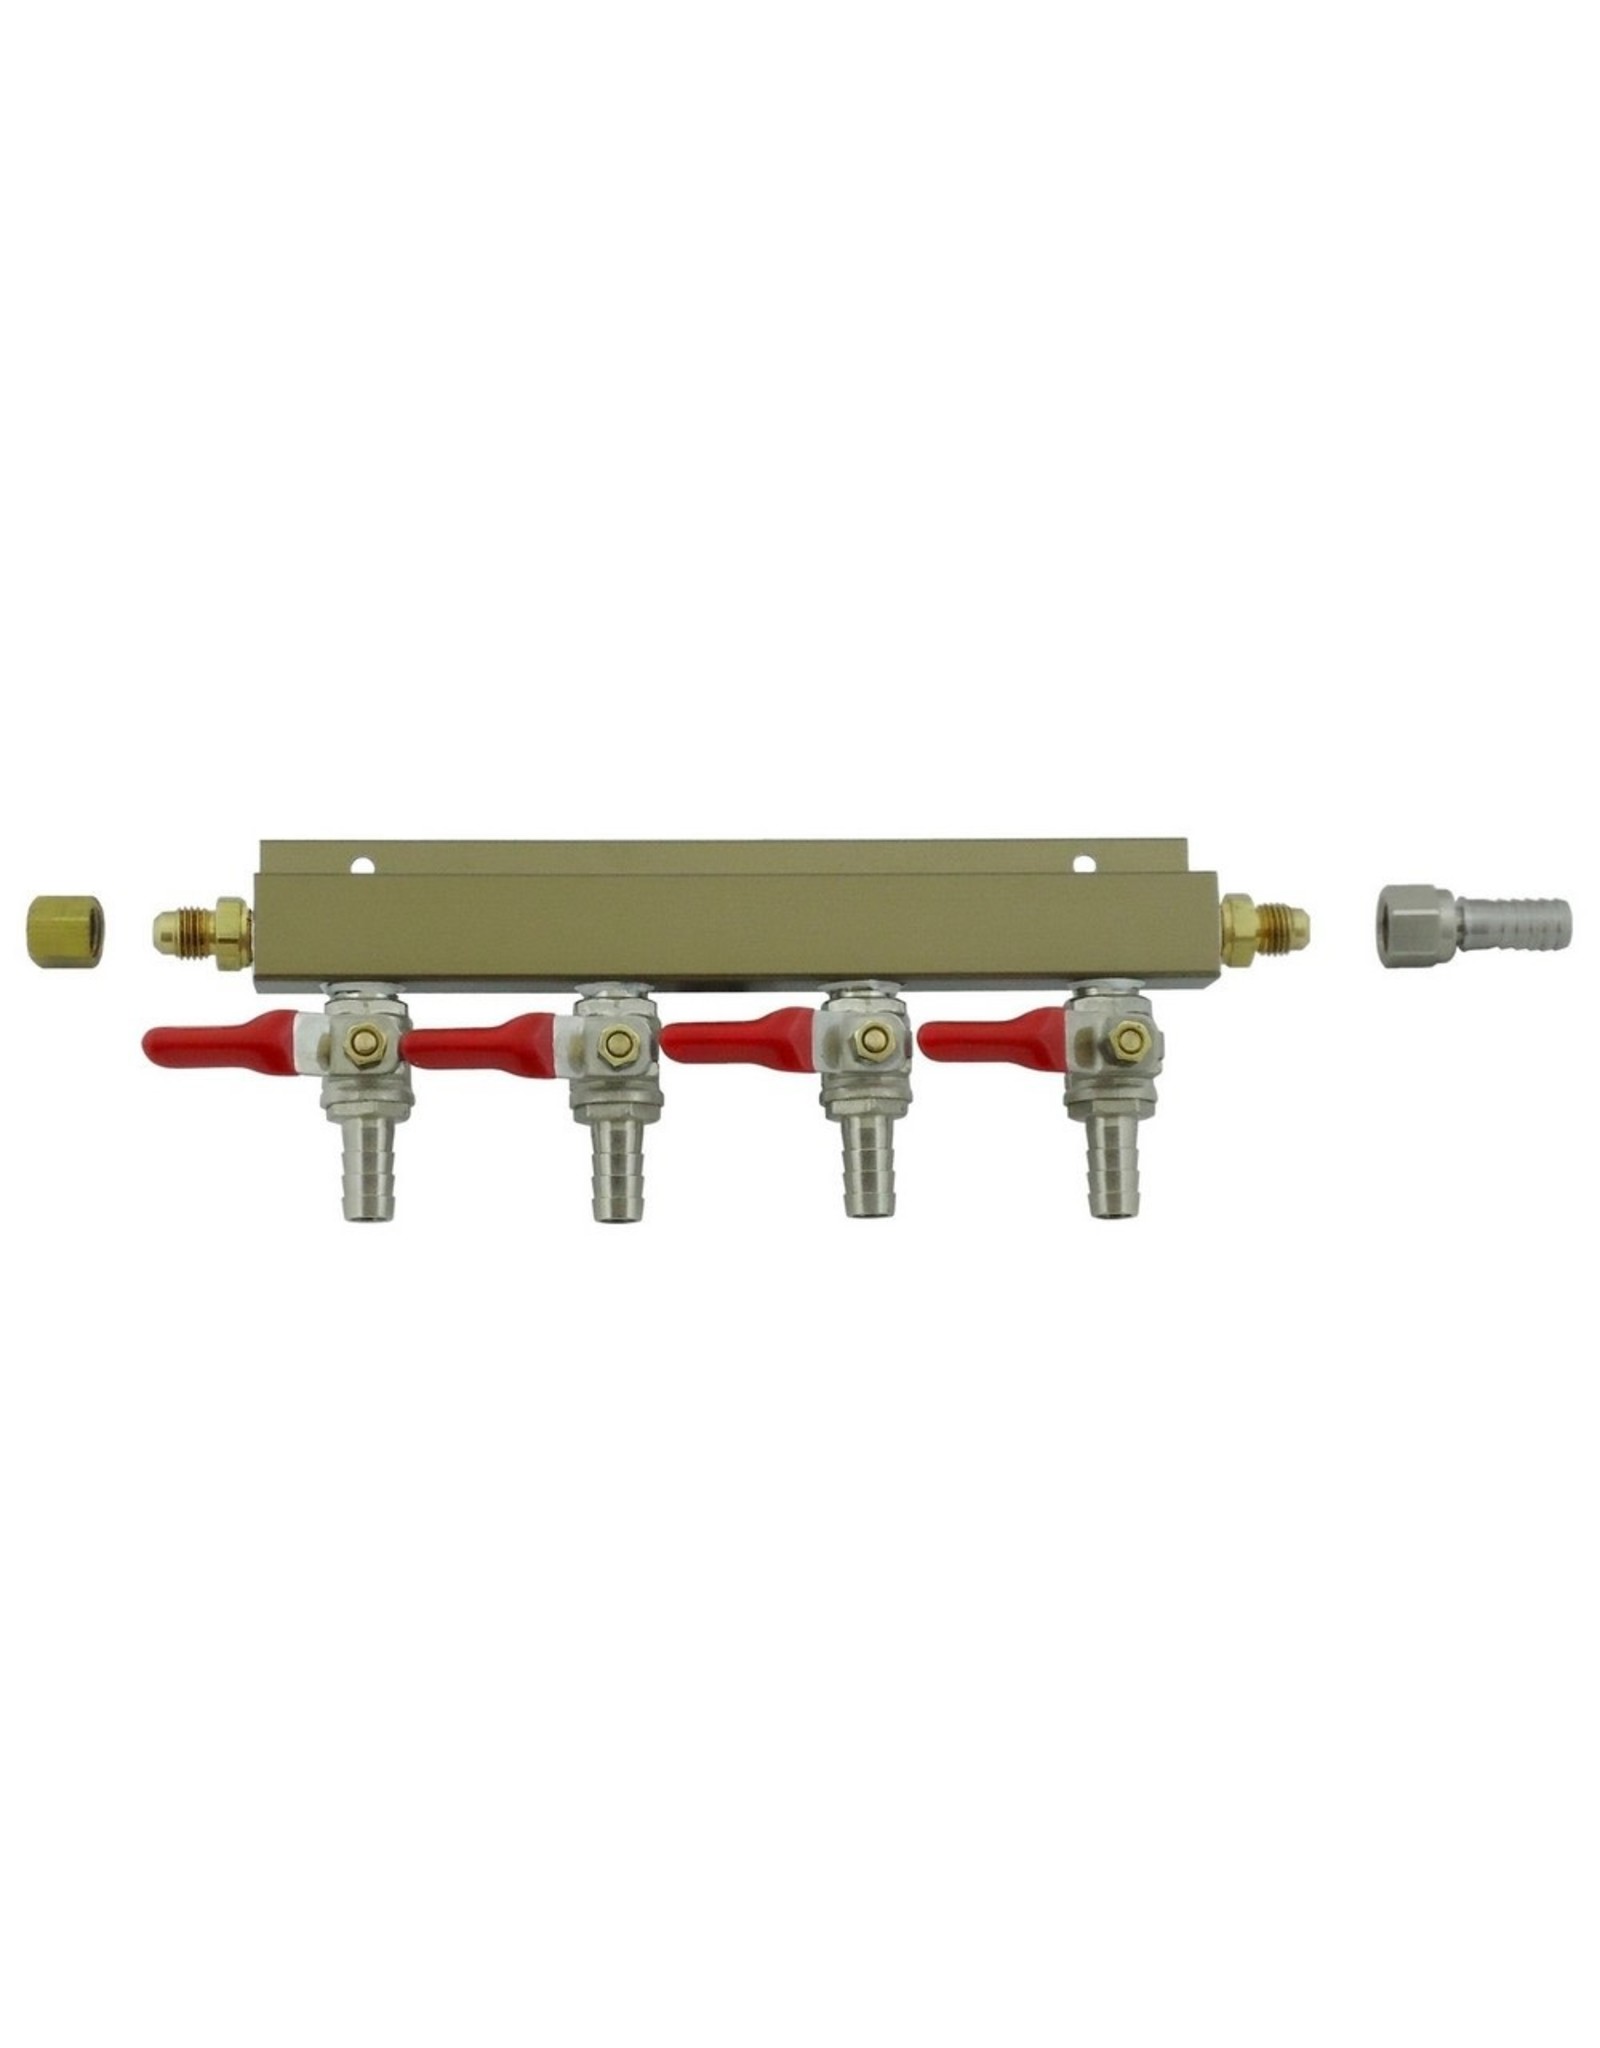 4 line manifold 3/8" barb CO2 distribution w/ check valve